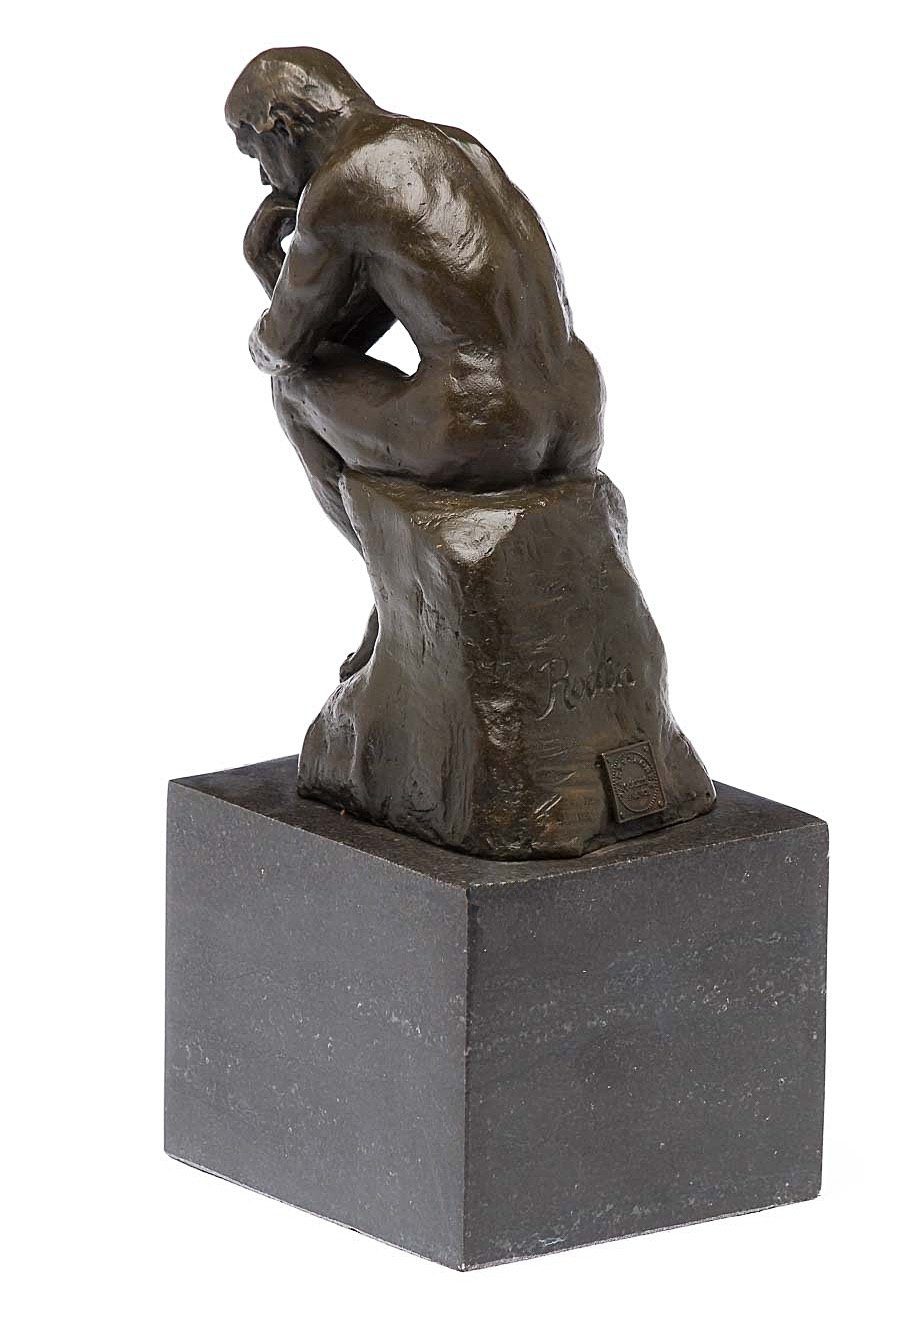 Aubaho Skulptur Bronzeskulptur Rodin Skulptur Bronzefigur Rep Denker Kopie Bronze nach